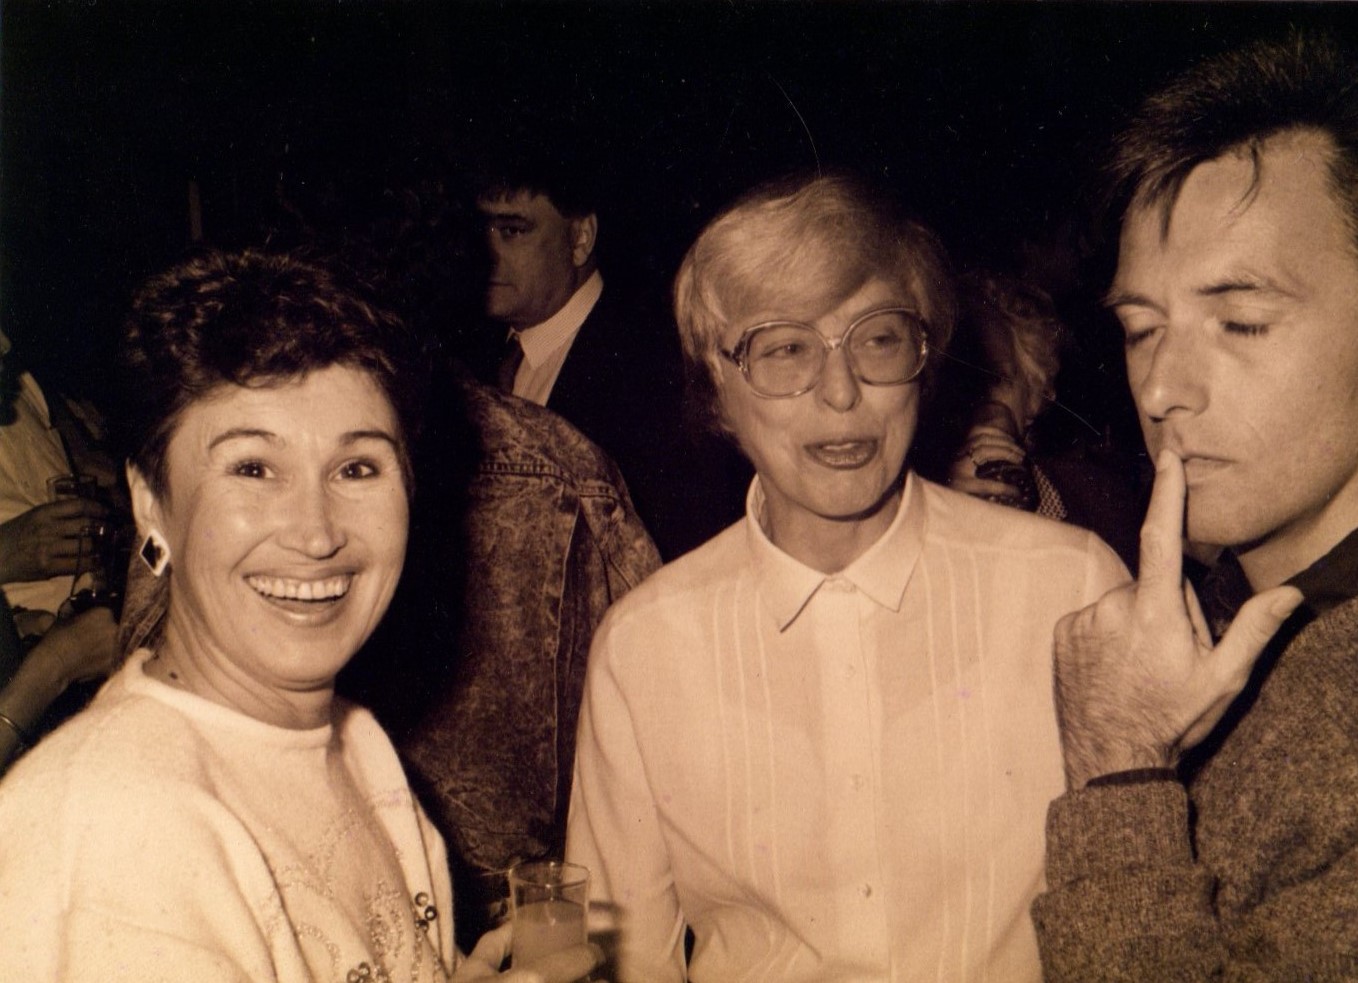 Liz Harris, Jan Caldwell and Alan at Marian Street Theatre - 1980's photo